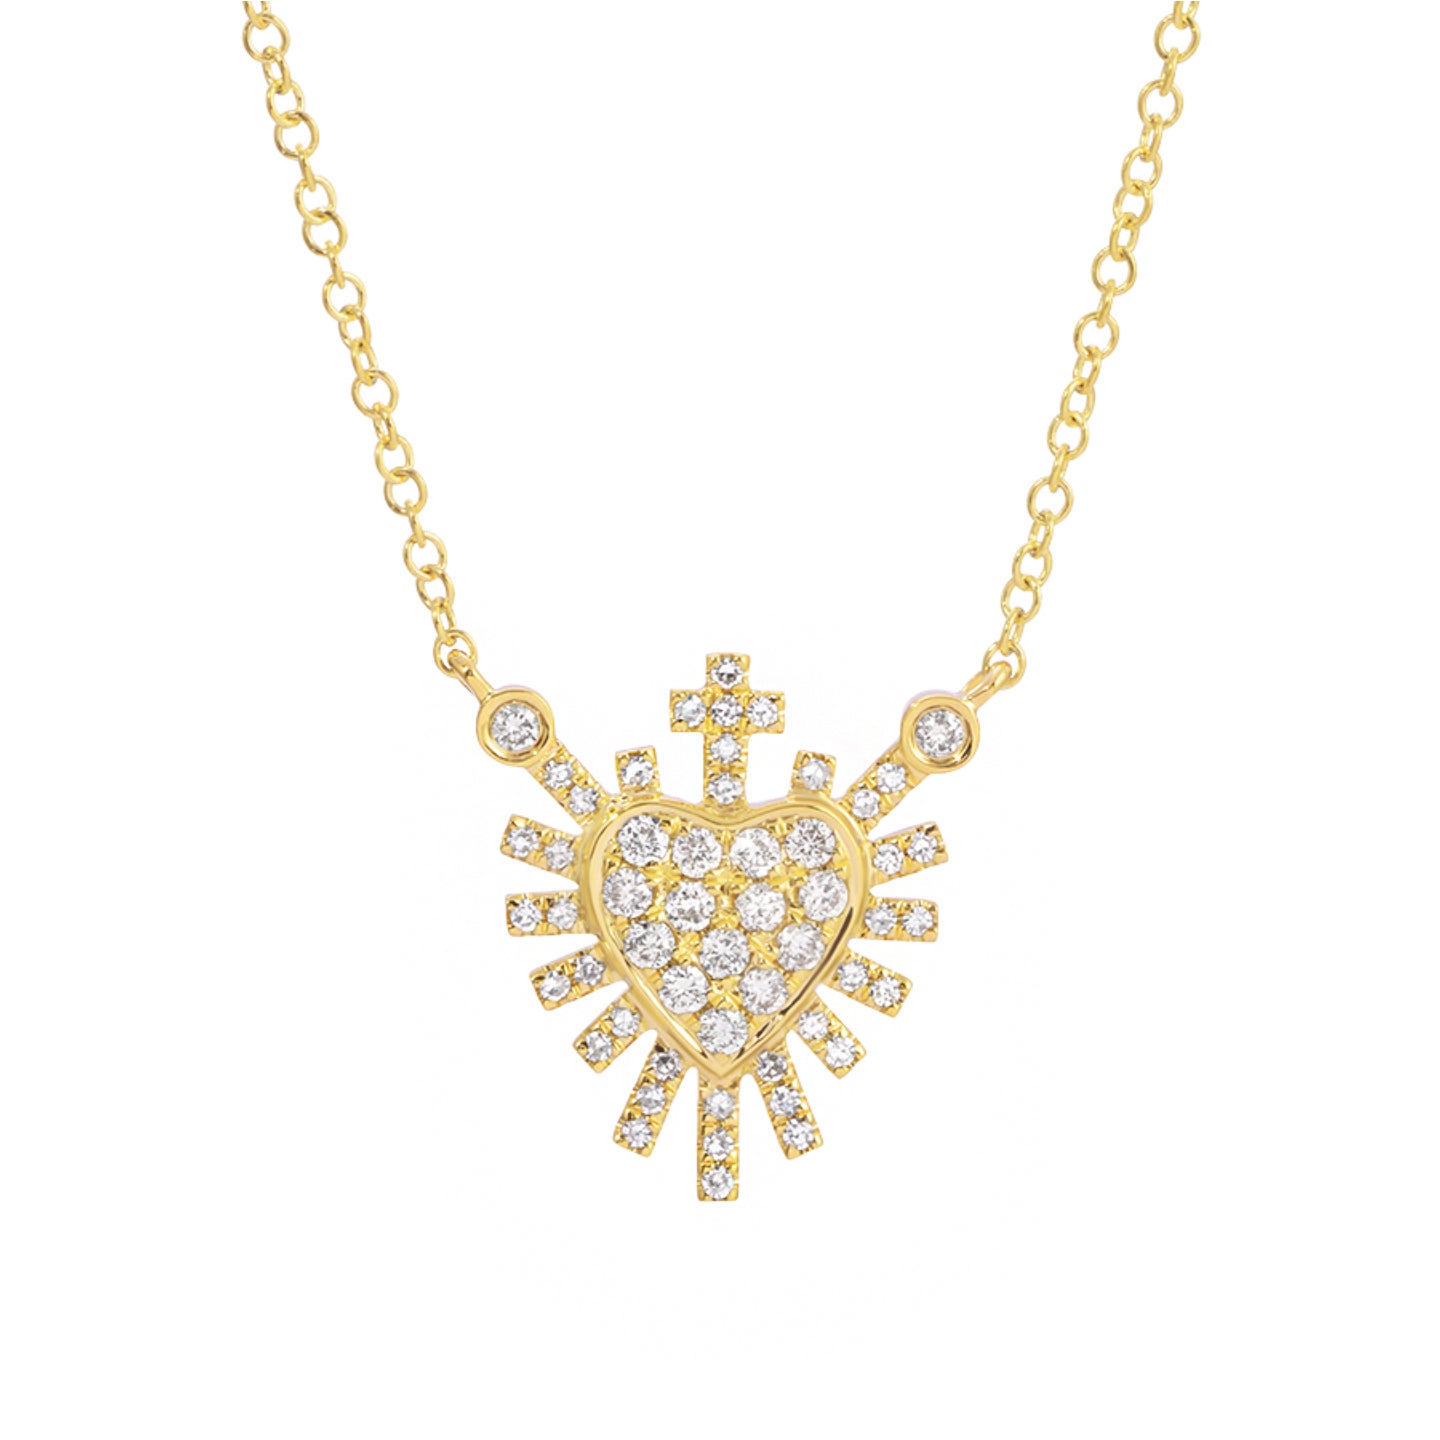 Mini sacred heart necklace with diamonds